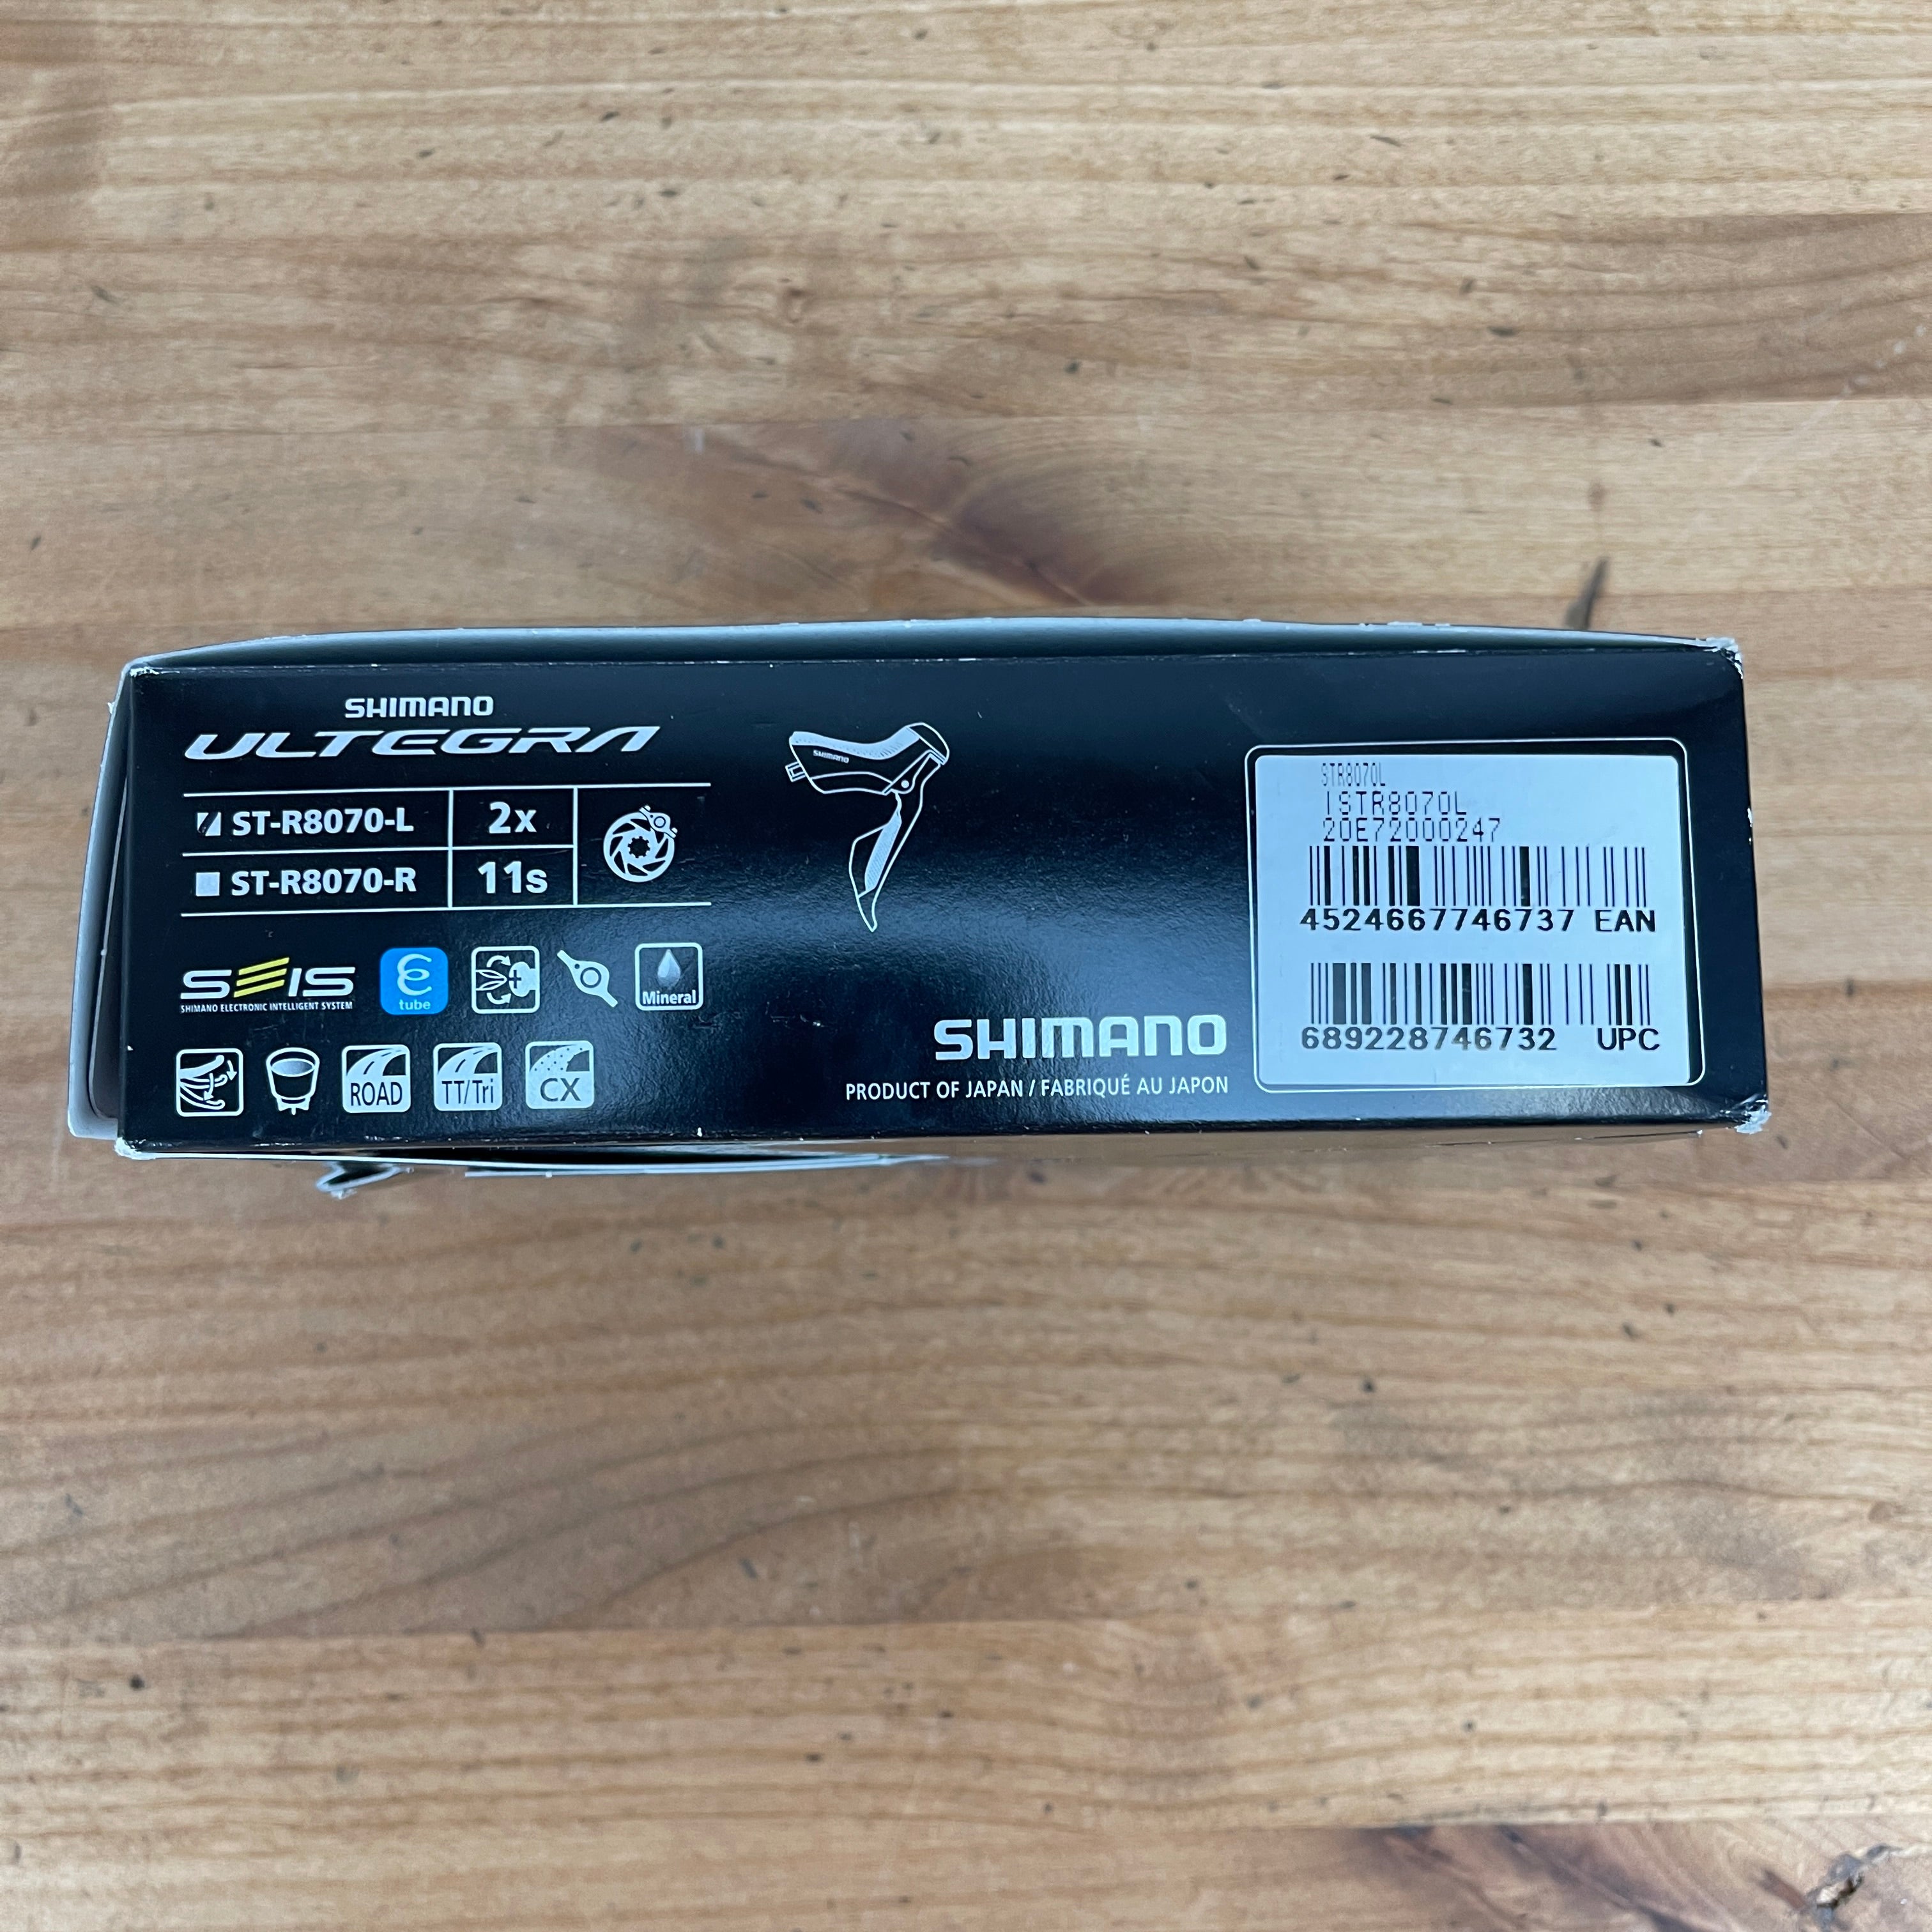 New! Shimano ST-R8070-L Ultegra Di2 11-Speed Hydraulic Disc Brake